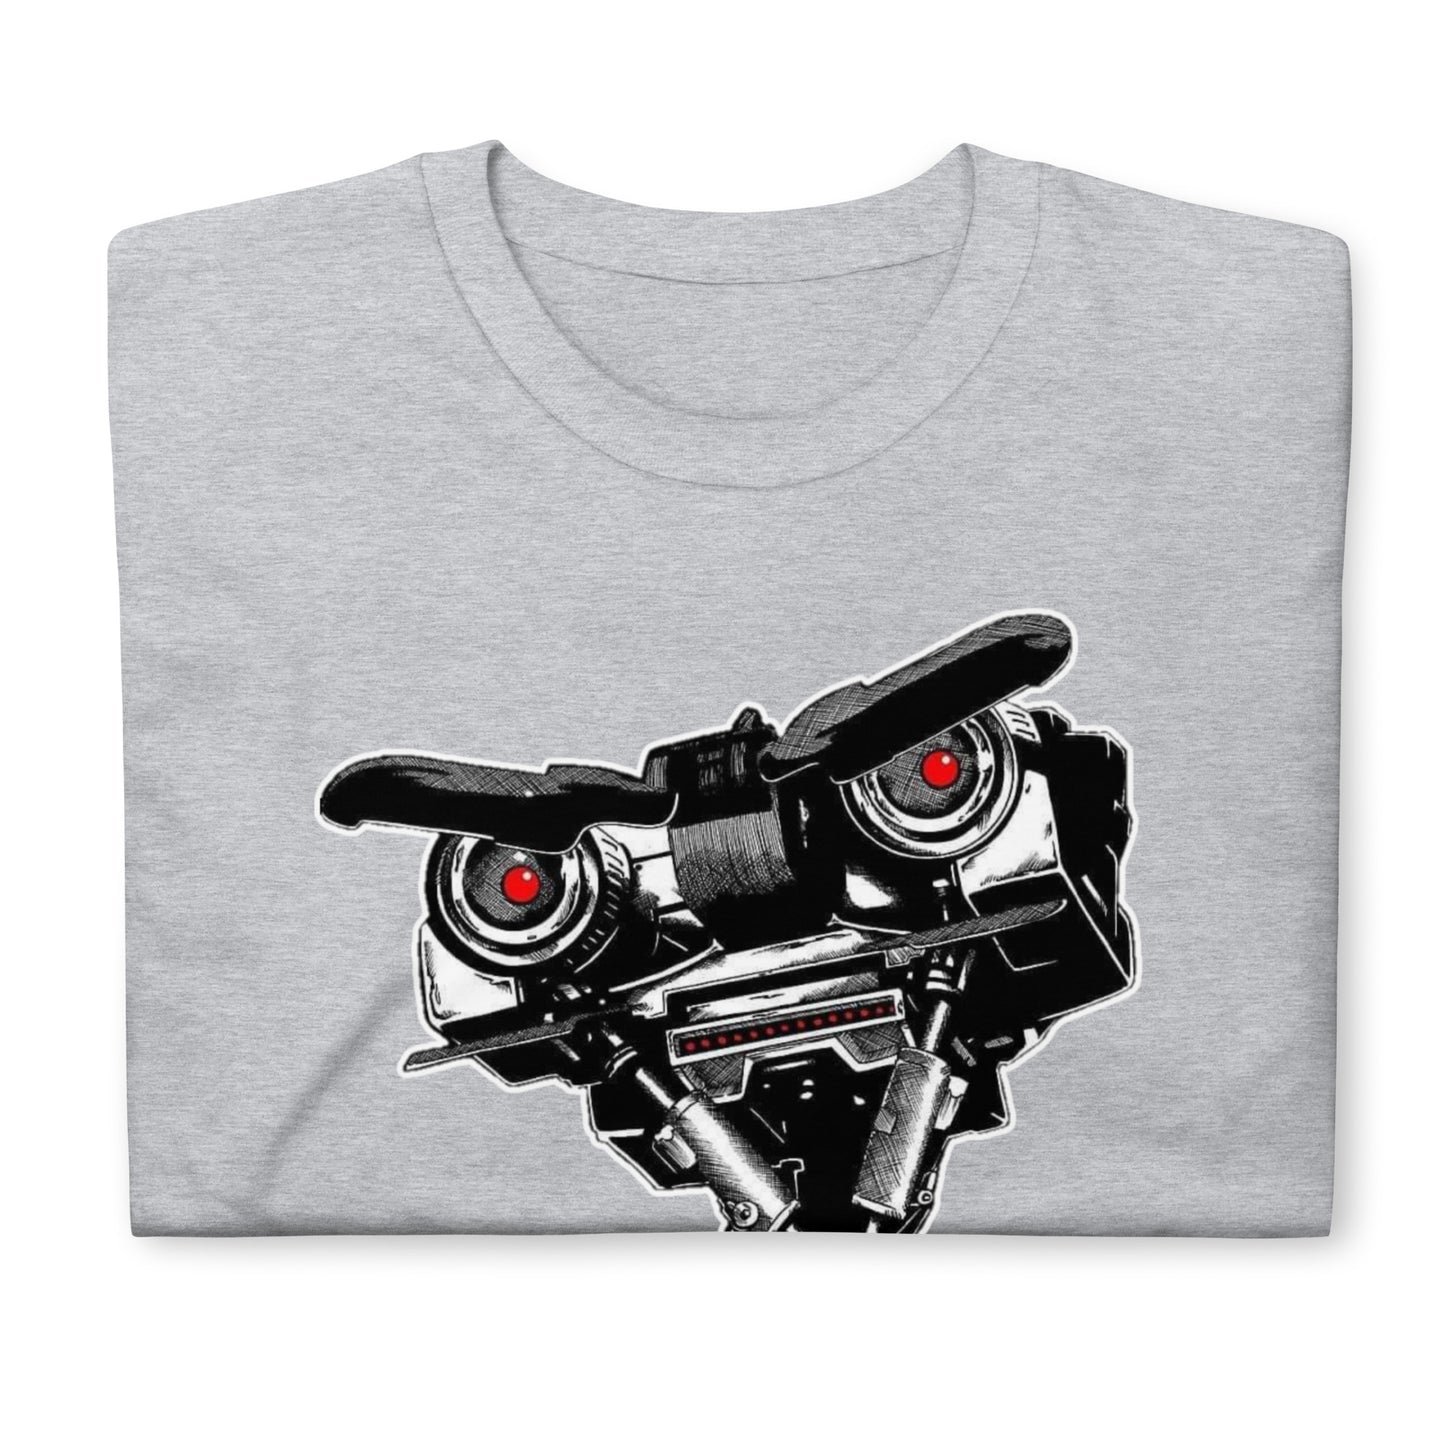 Short Circuit T-Shirt, Johnny 5.